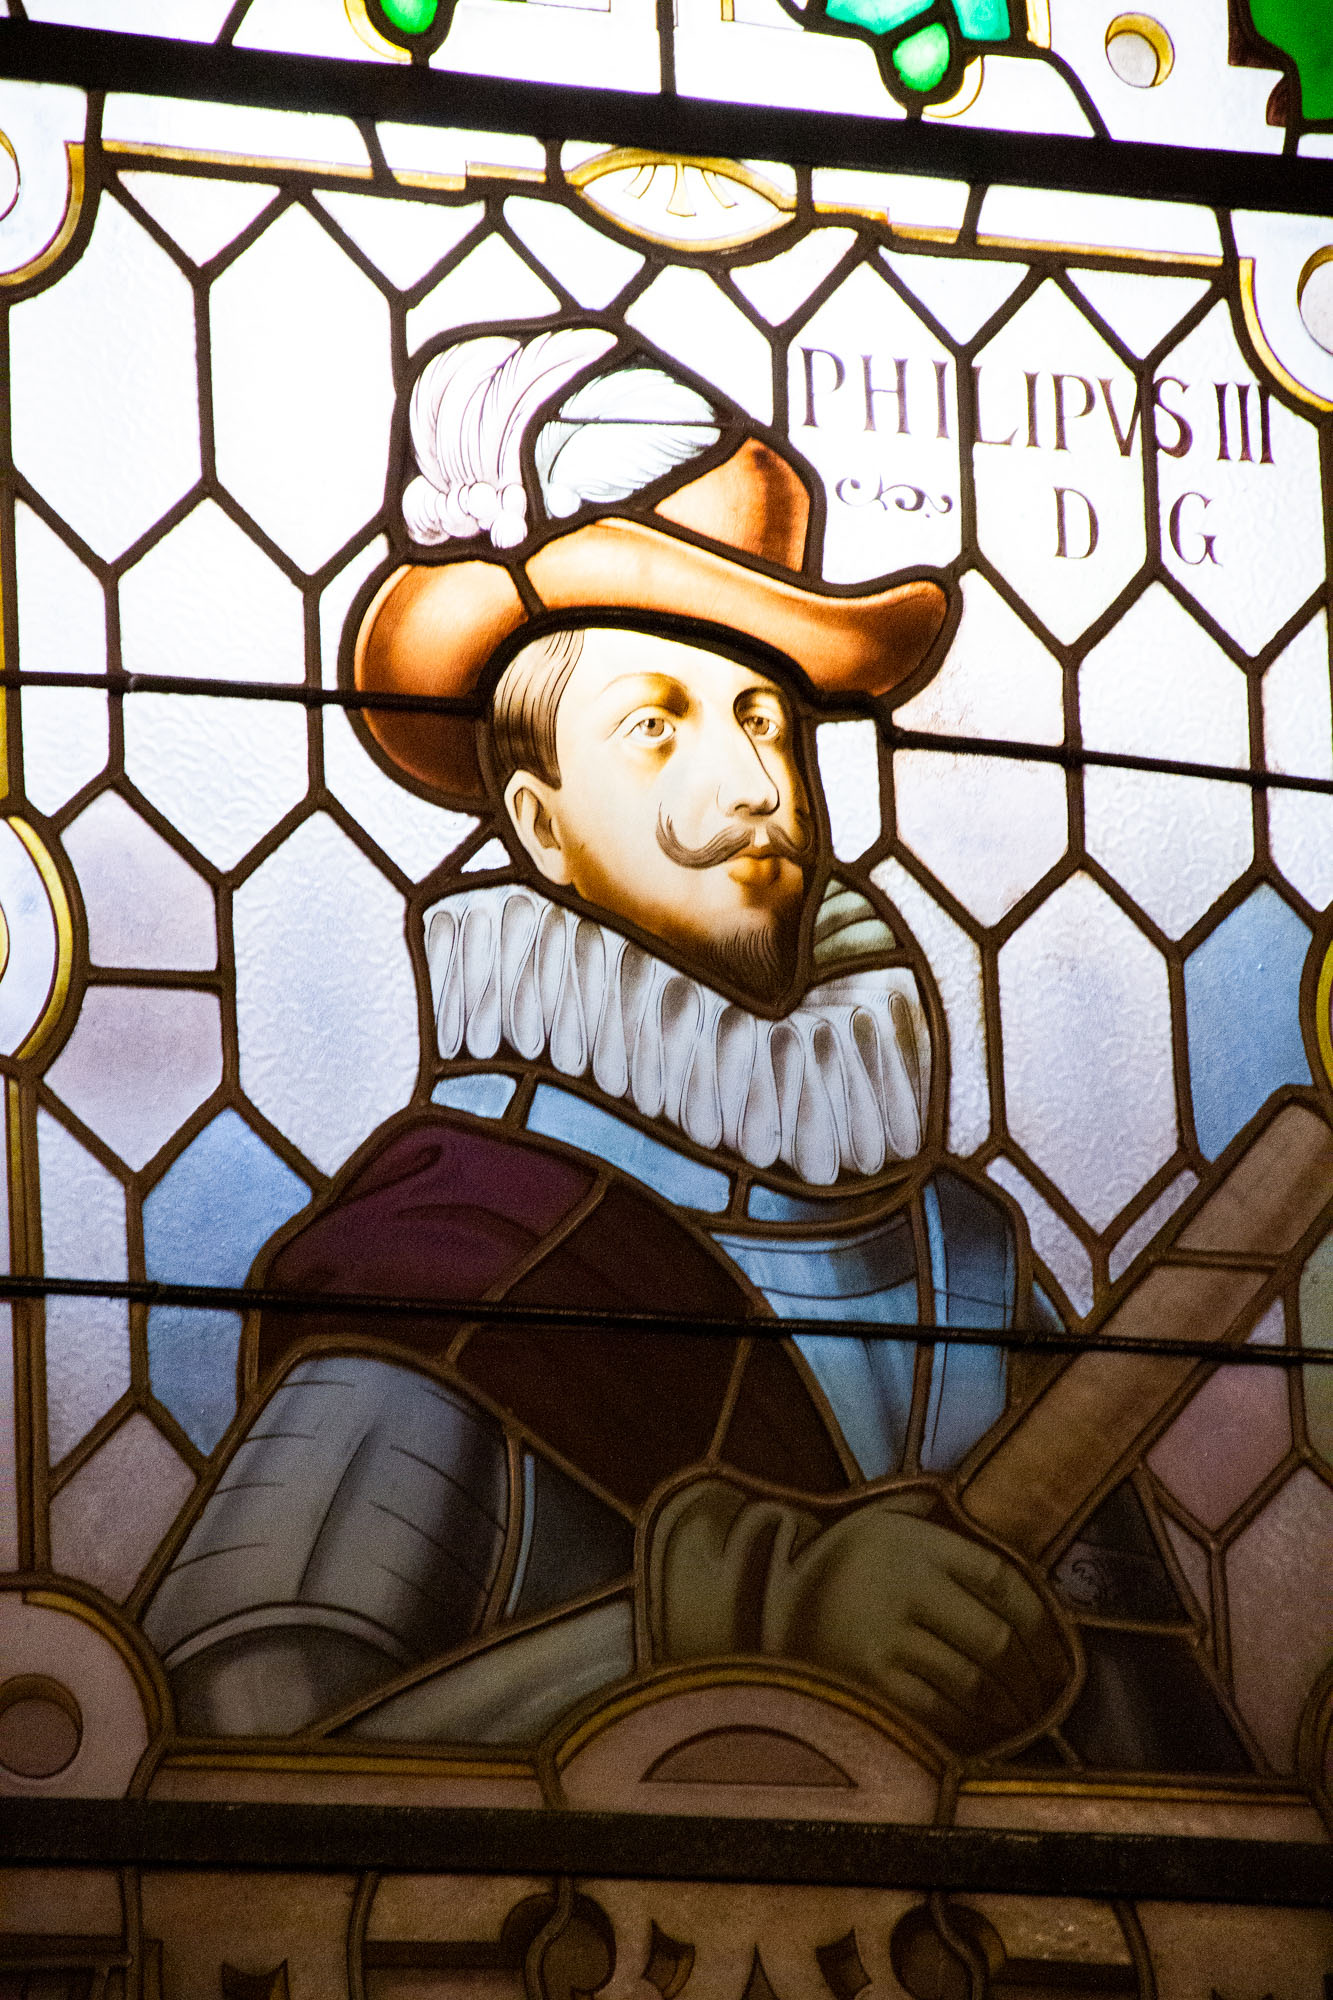 Philipus III Oviedo University stained glass